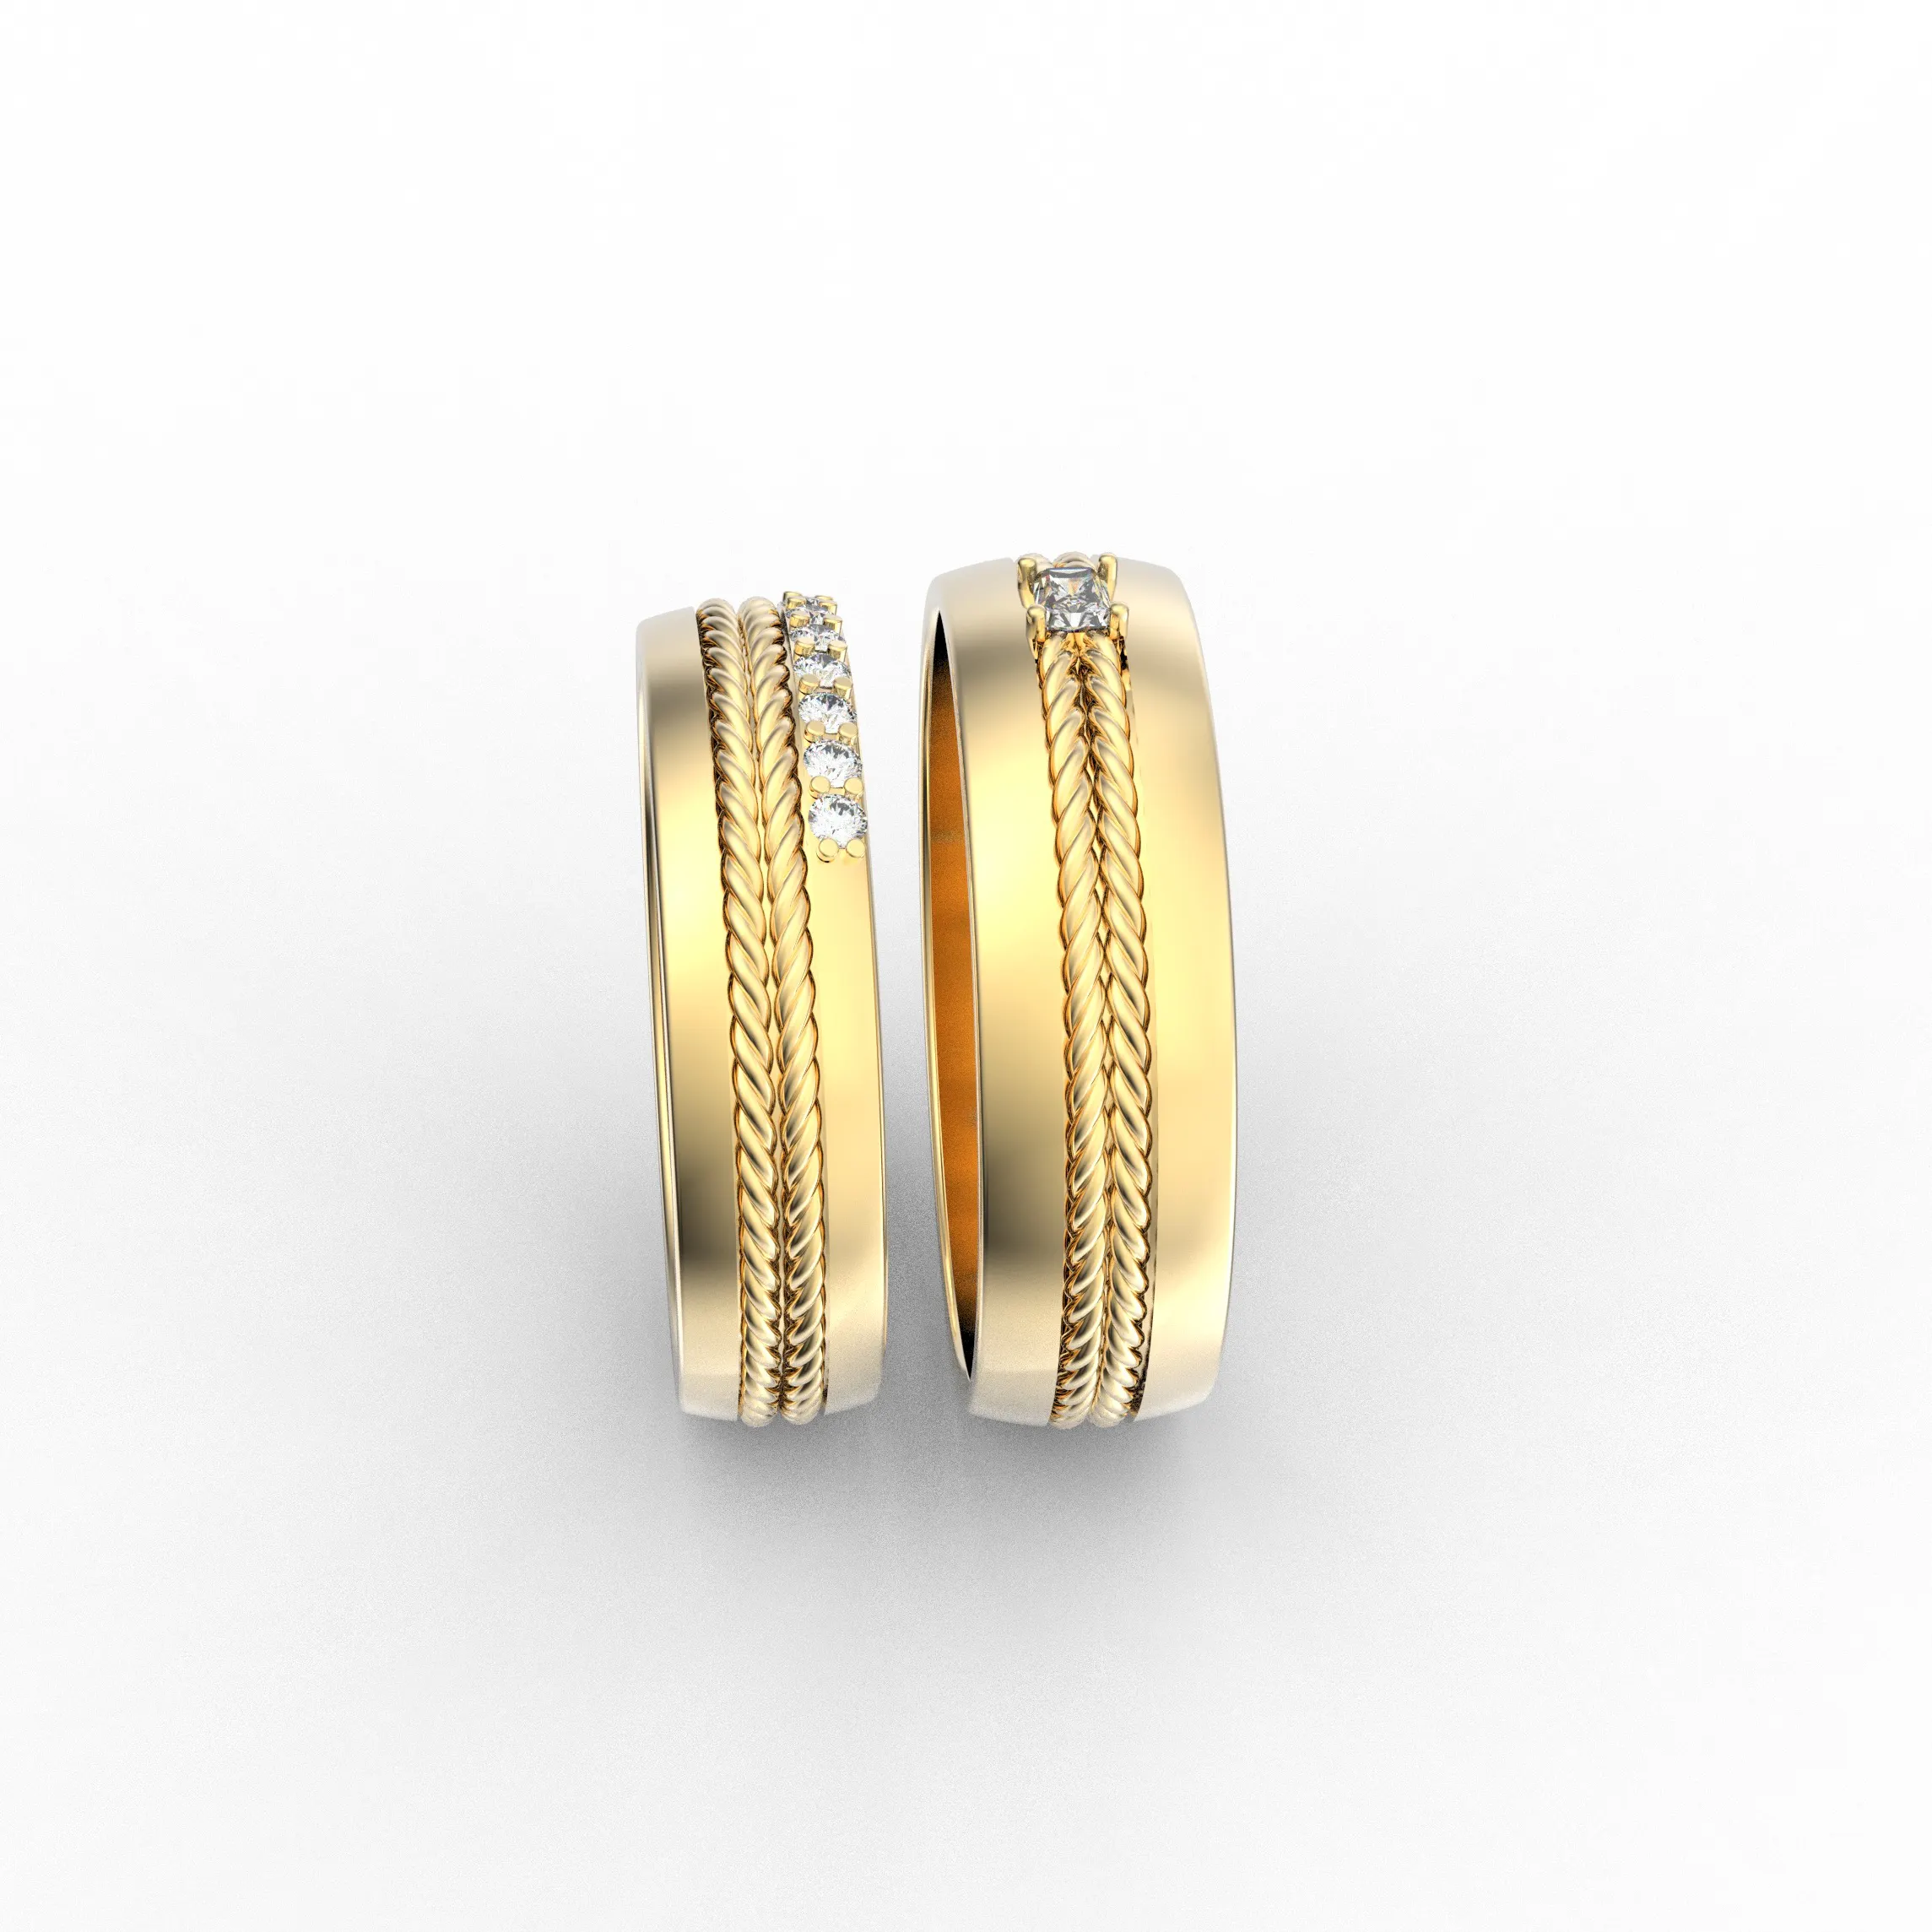 2023 Best design wedding Ring gold Real 10k 14K 18K Gold Ring Diamond moissanite for Men and Women gold jewelry customization